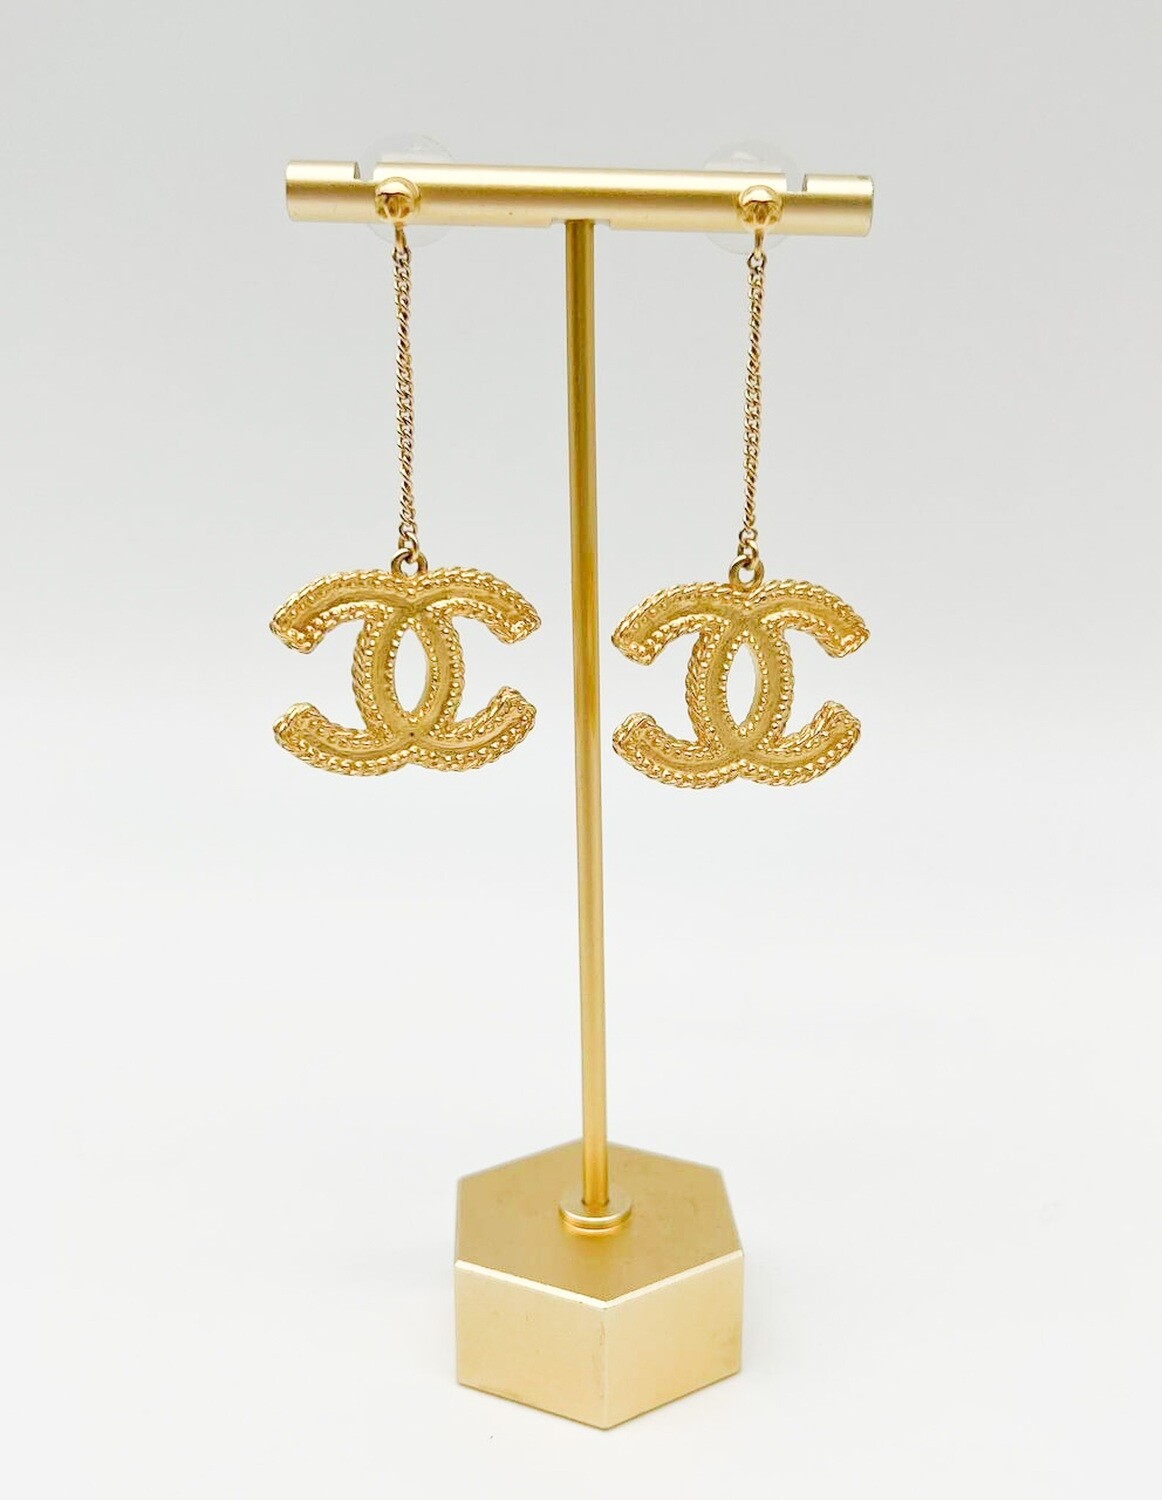 Stænke Derive Armstrong Chanel Earrings, Drop CC Matte Gold Earrings, Preowned In Box MA001 - Julia  Rose Boston | Shop